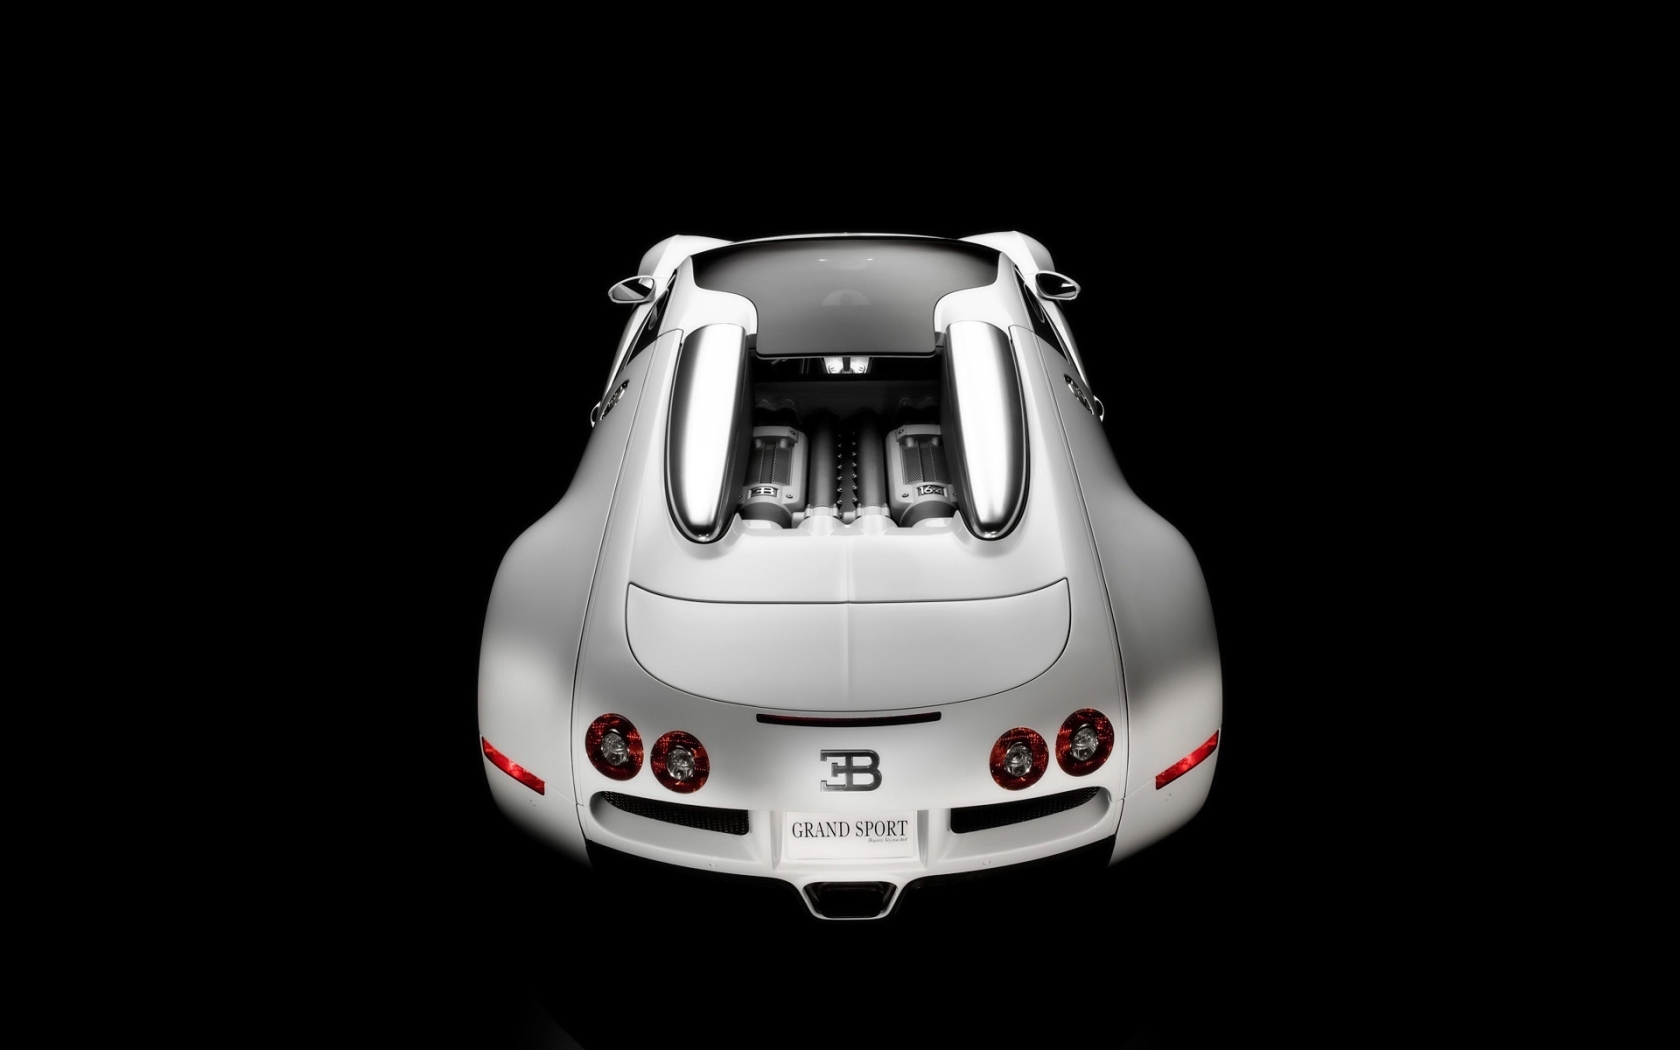 Bugatti Veyron 16.4 Grand Sport Production Version 2009 - Studio Rear Top for 1680 x 1050 widescreen resolution